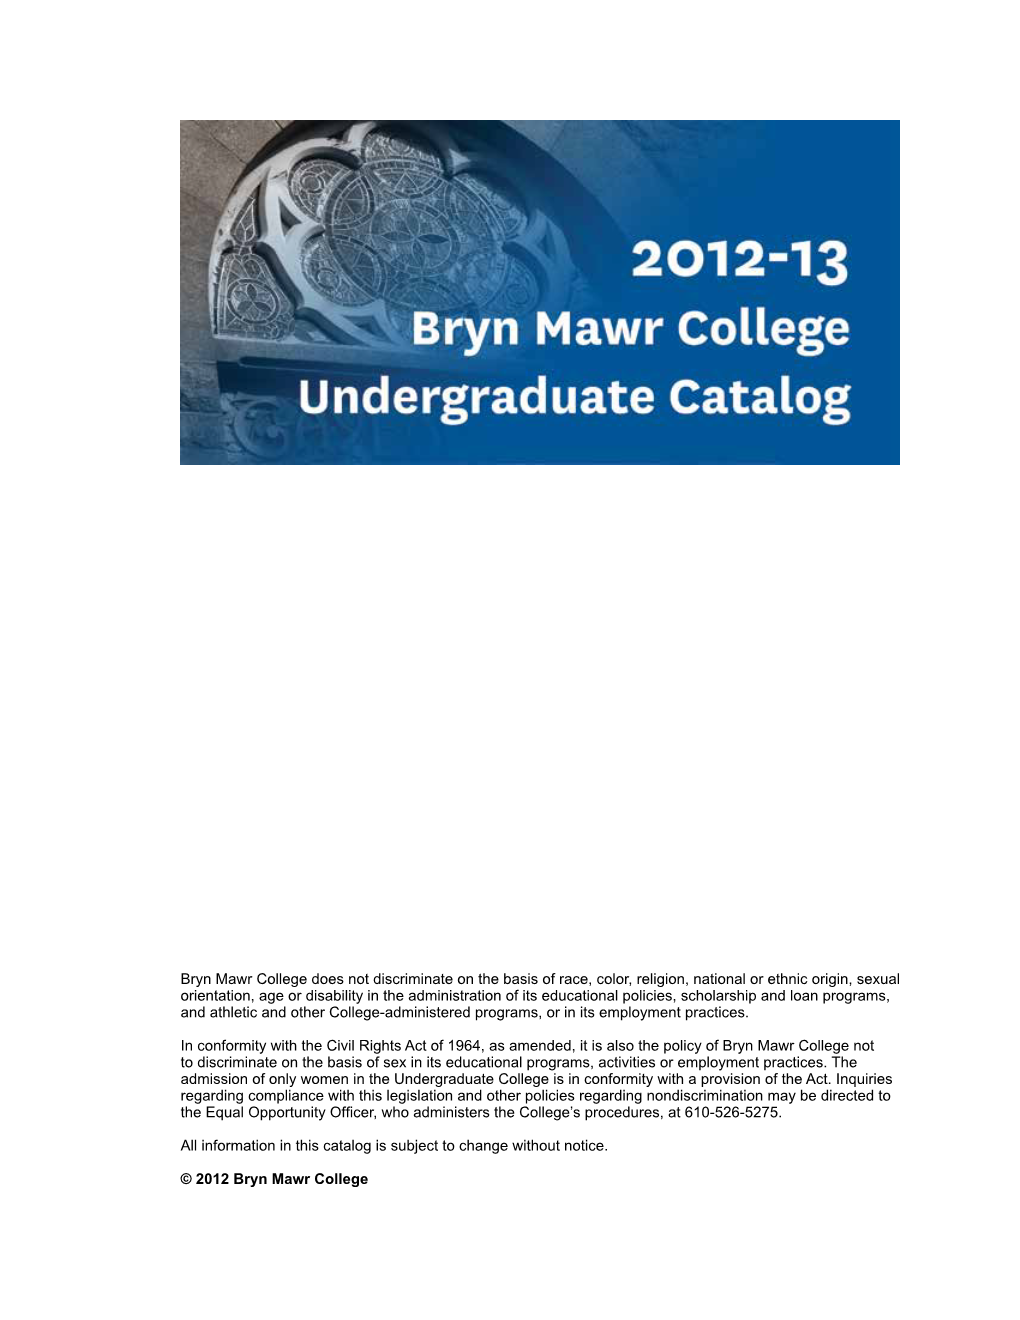 2012-13 Bryn Mawr College Undergraduate Catalog